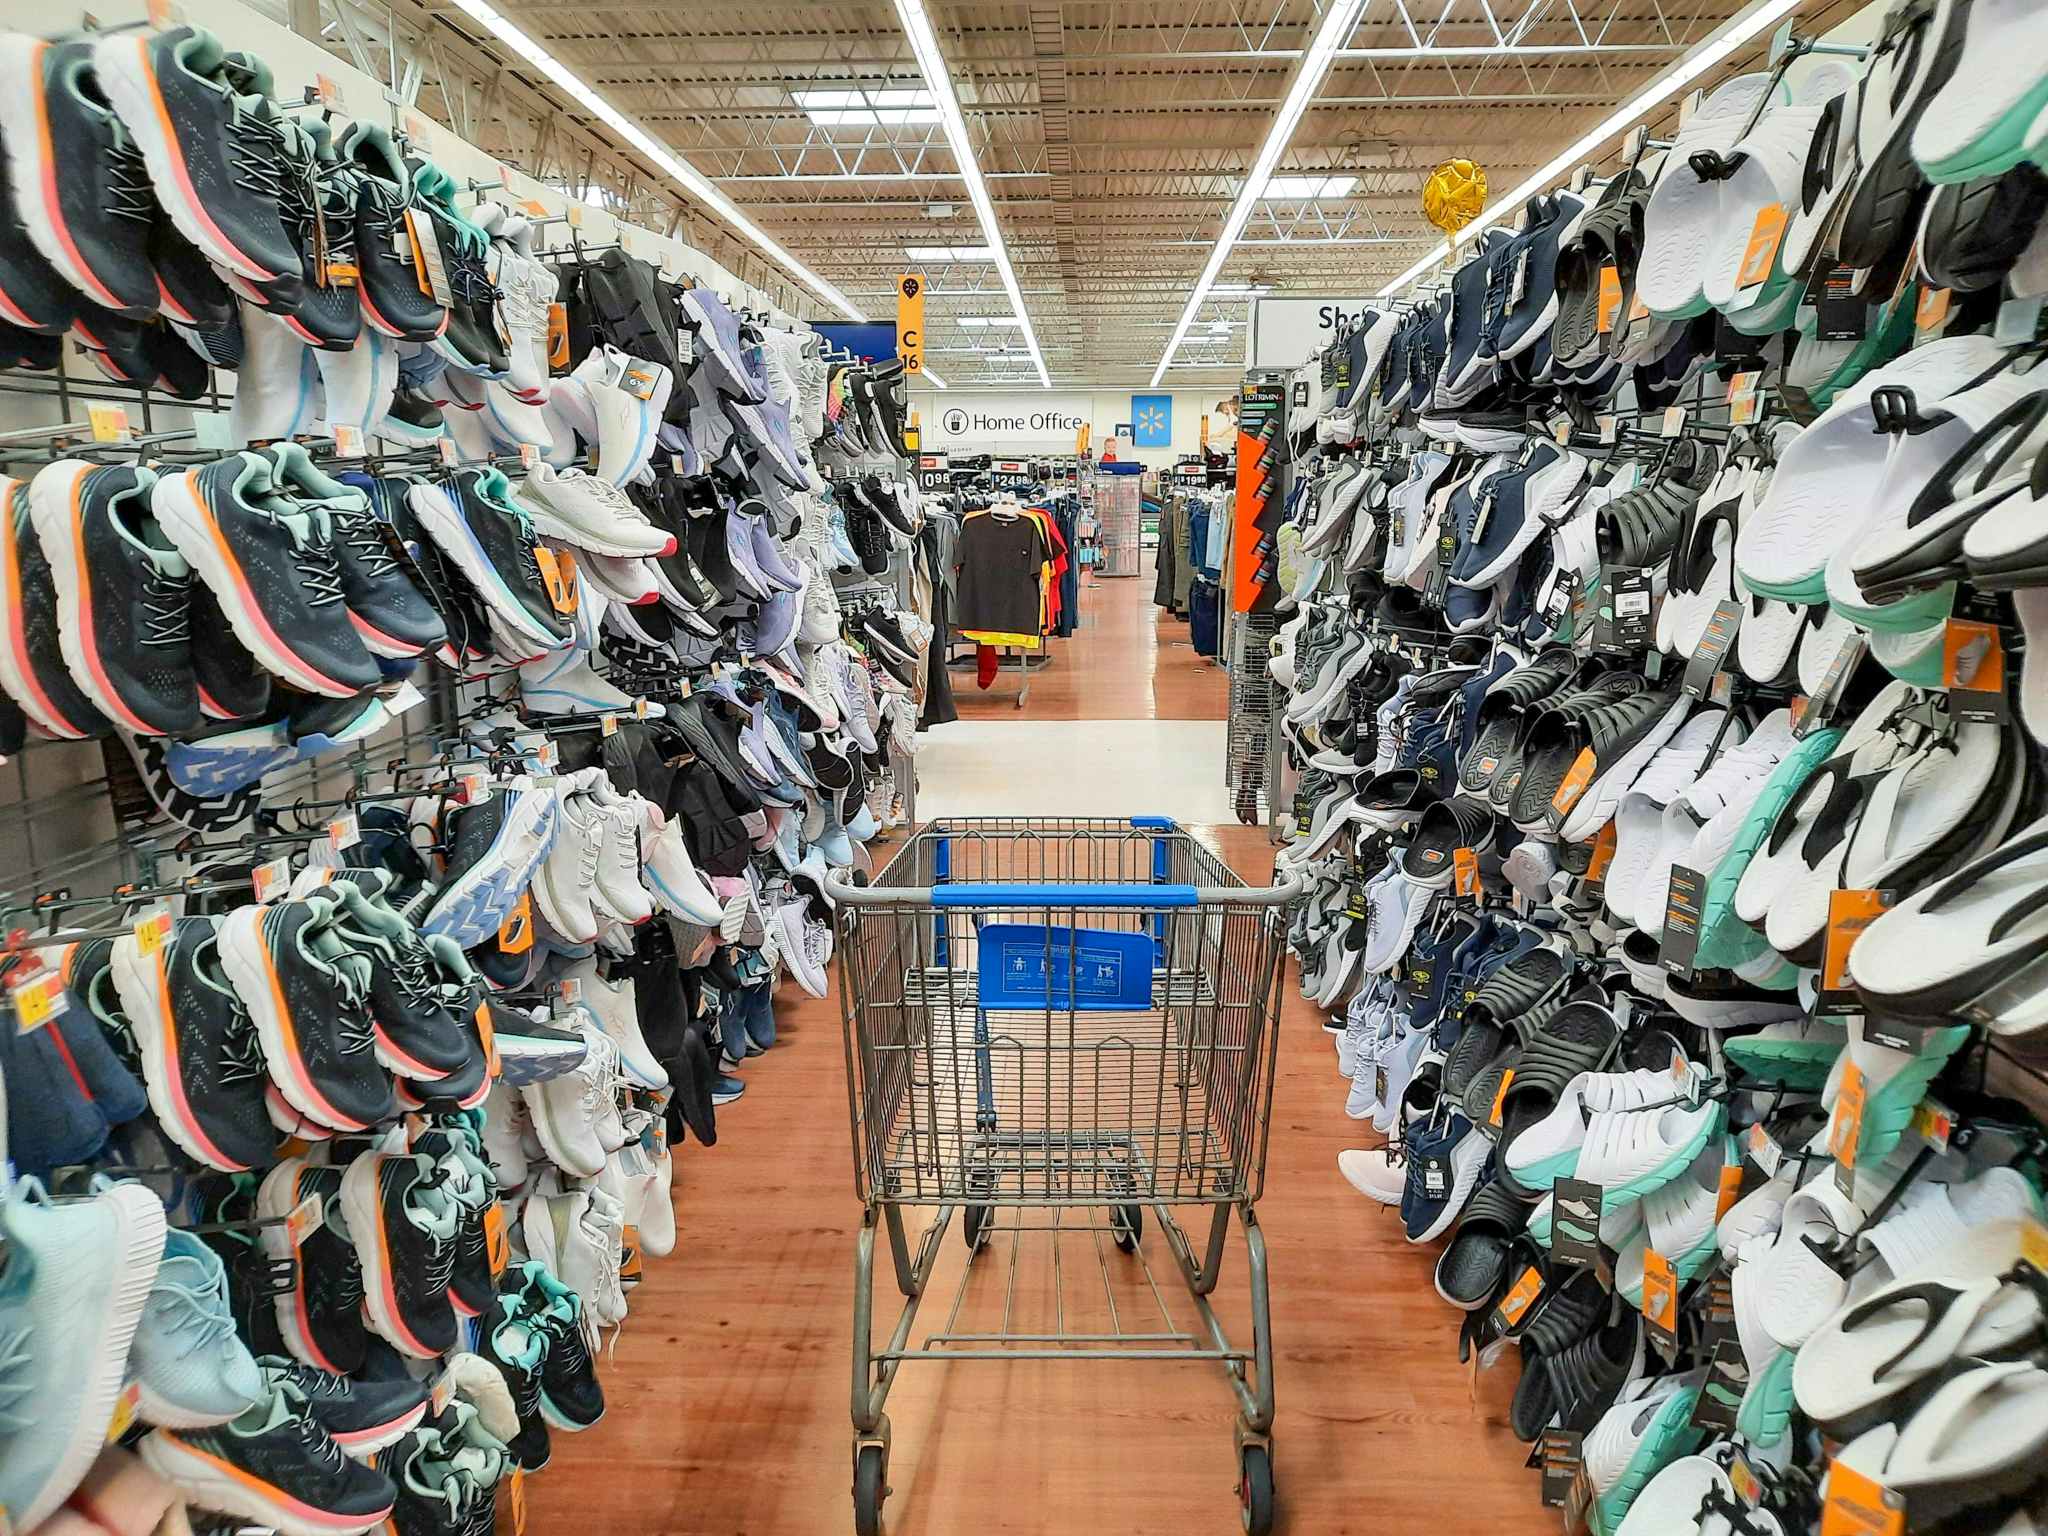 Isotoner Women's Slippers, Just $6.88 at Walmart (Reg. $12.99)